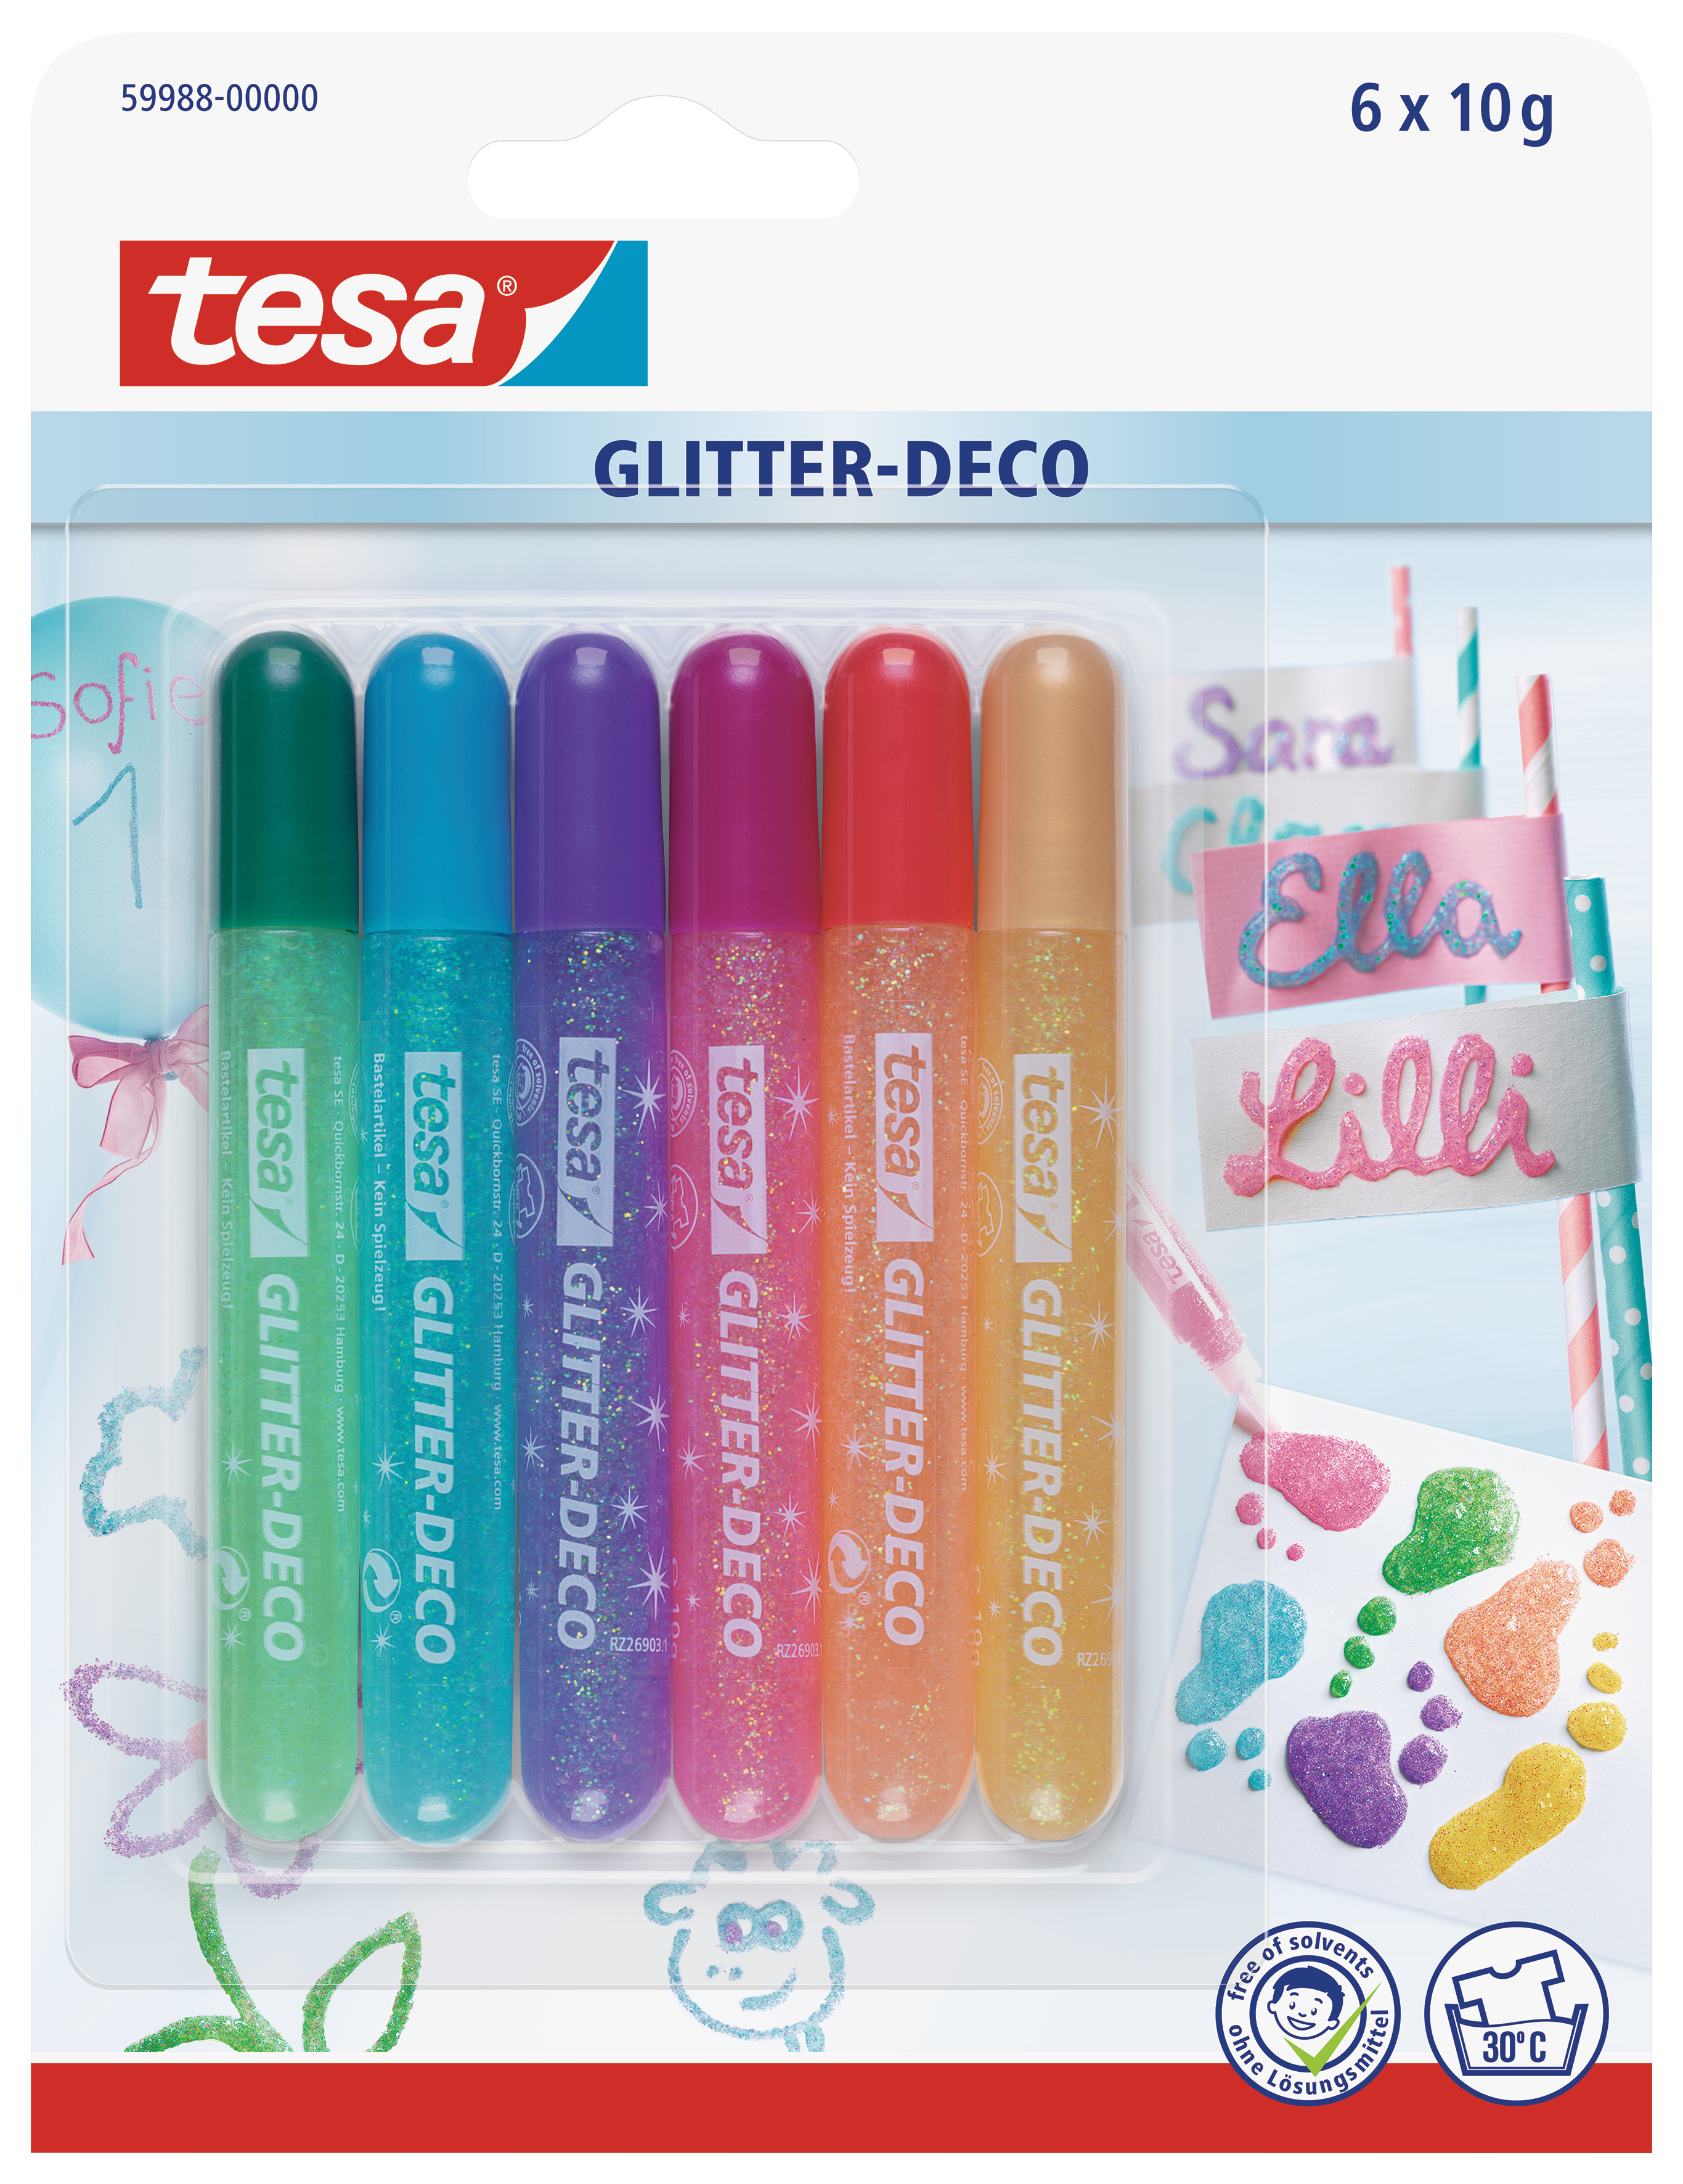 TESA Glitter Deco Candy Colors 599880000 6x10g 6 Stück